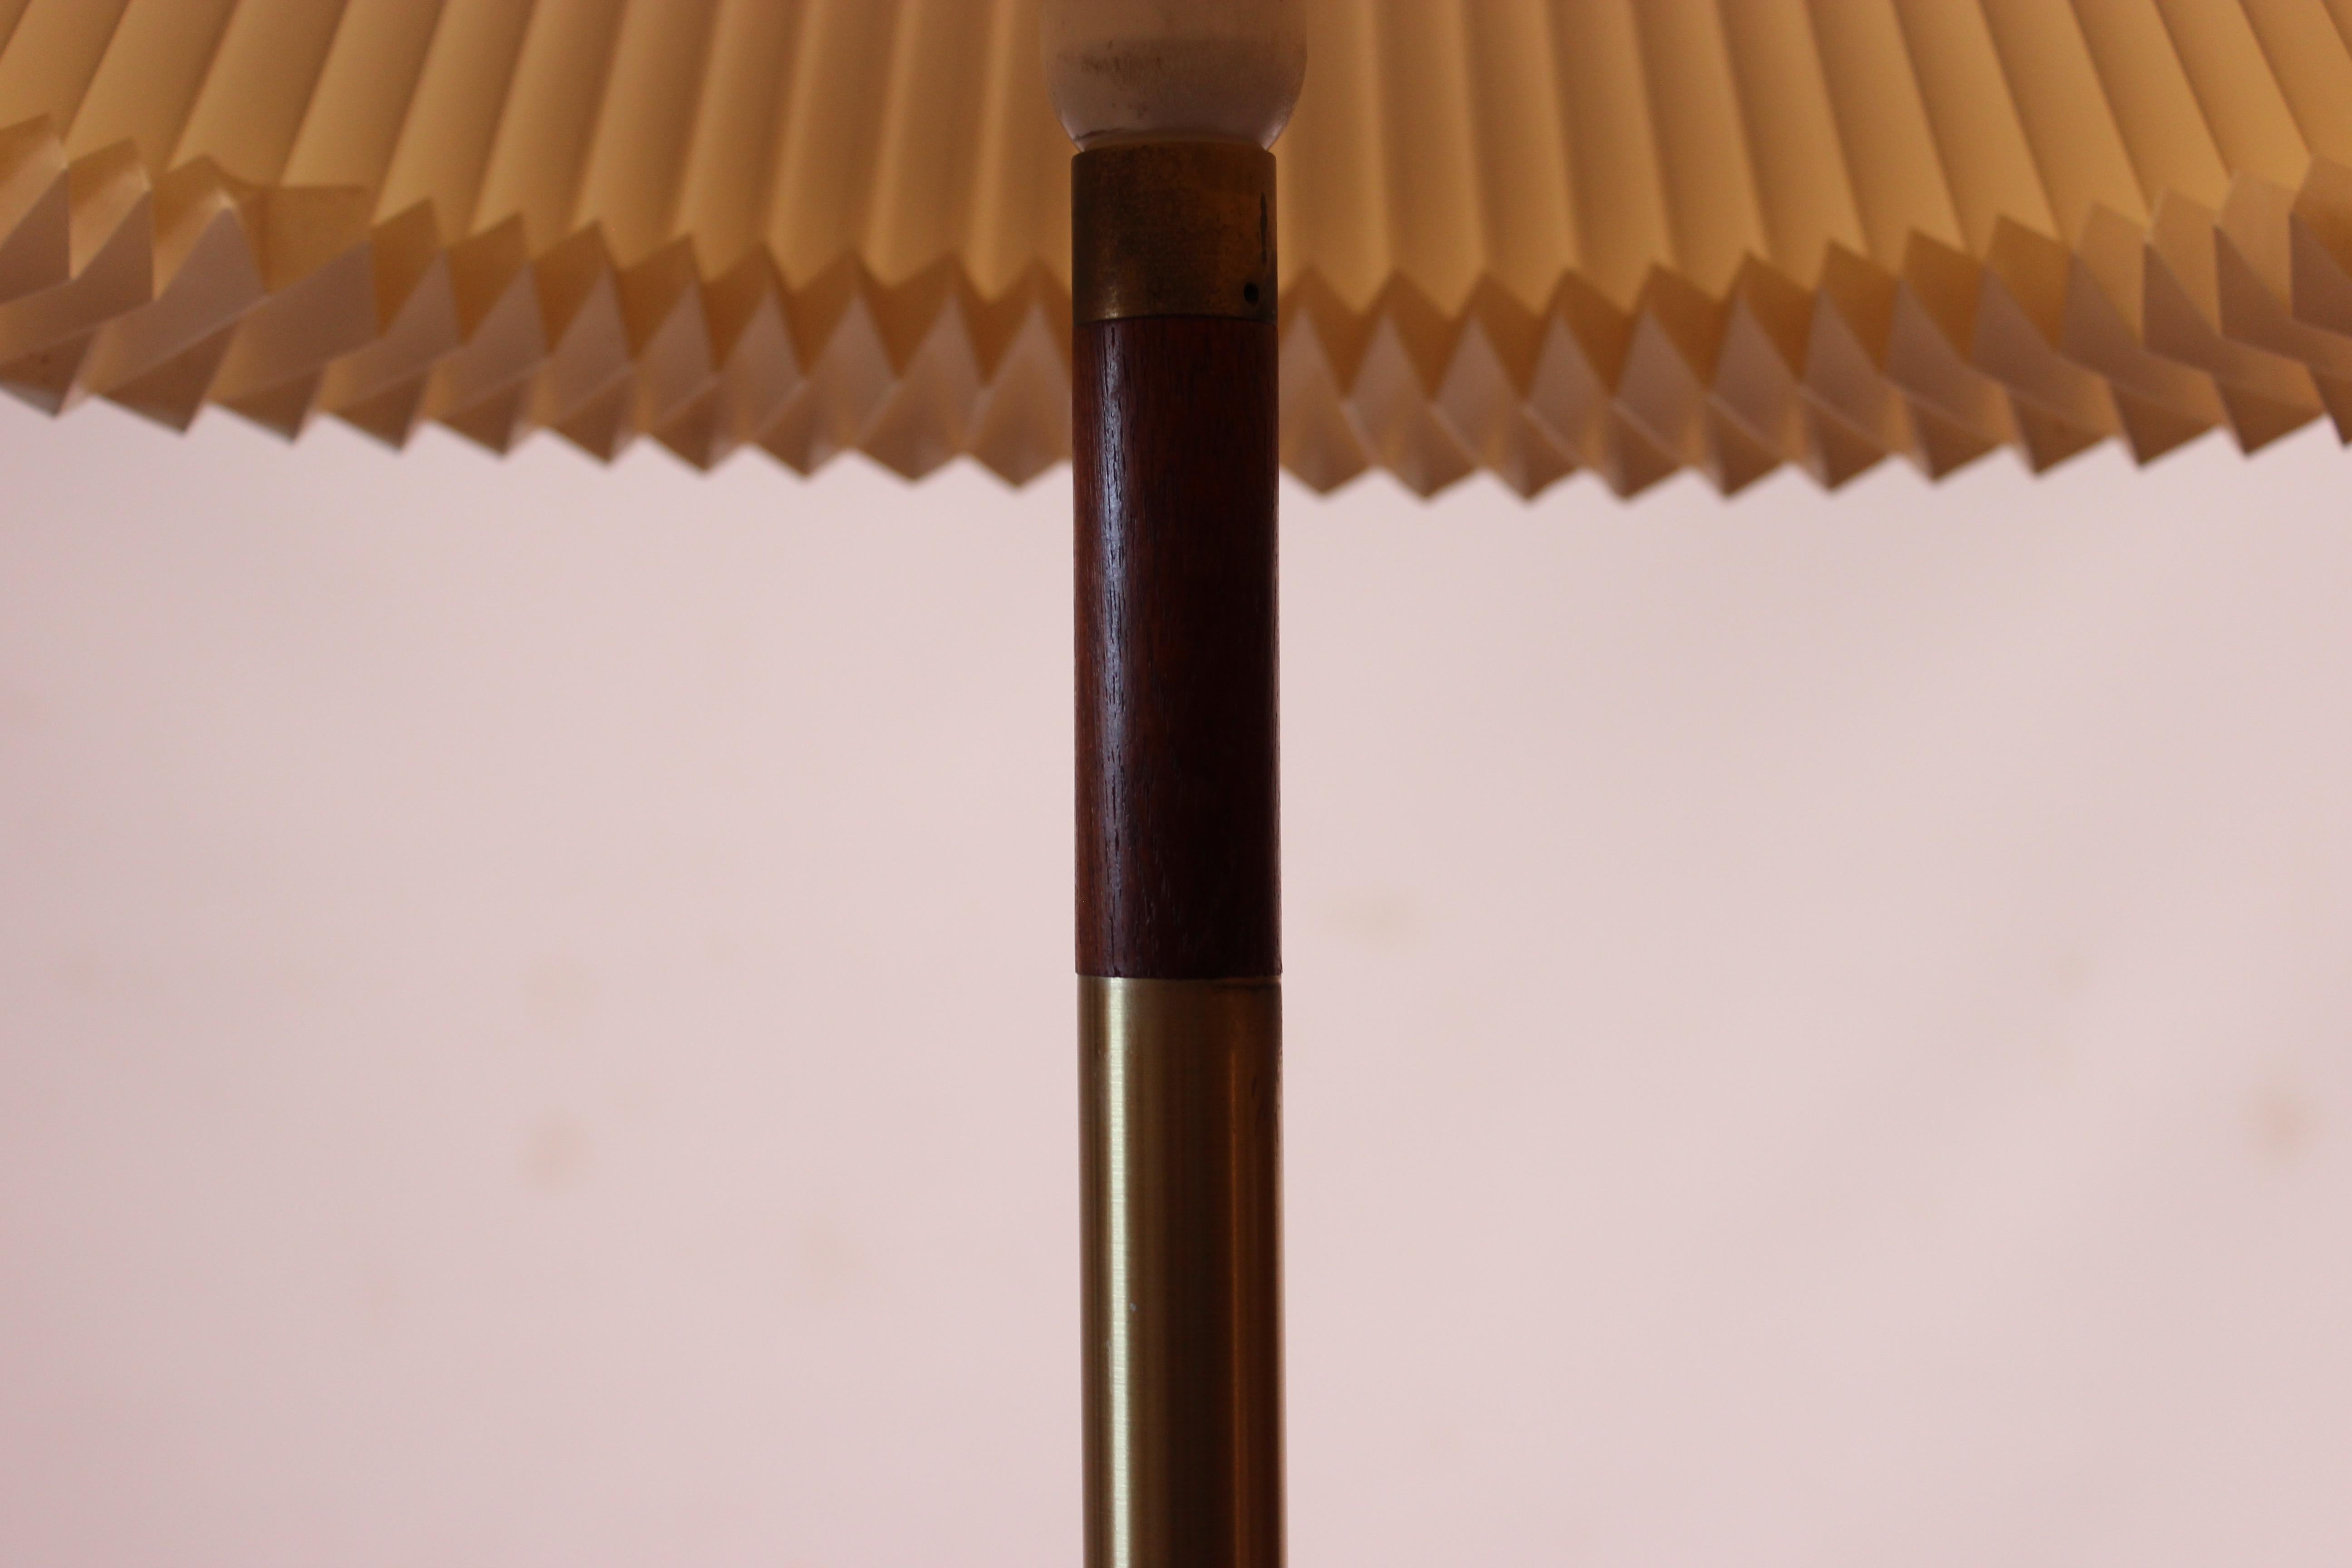 Scandinavian Modern Tall Floor Lamp of Teak and Brass, of Danish Design from the 1960s